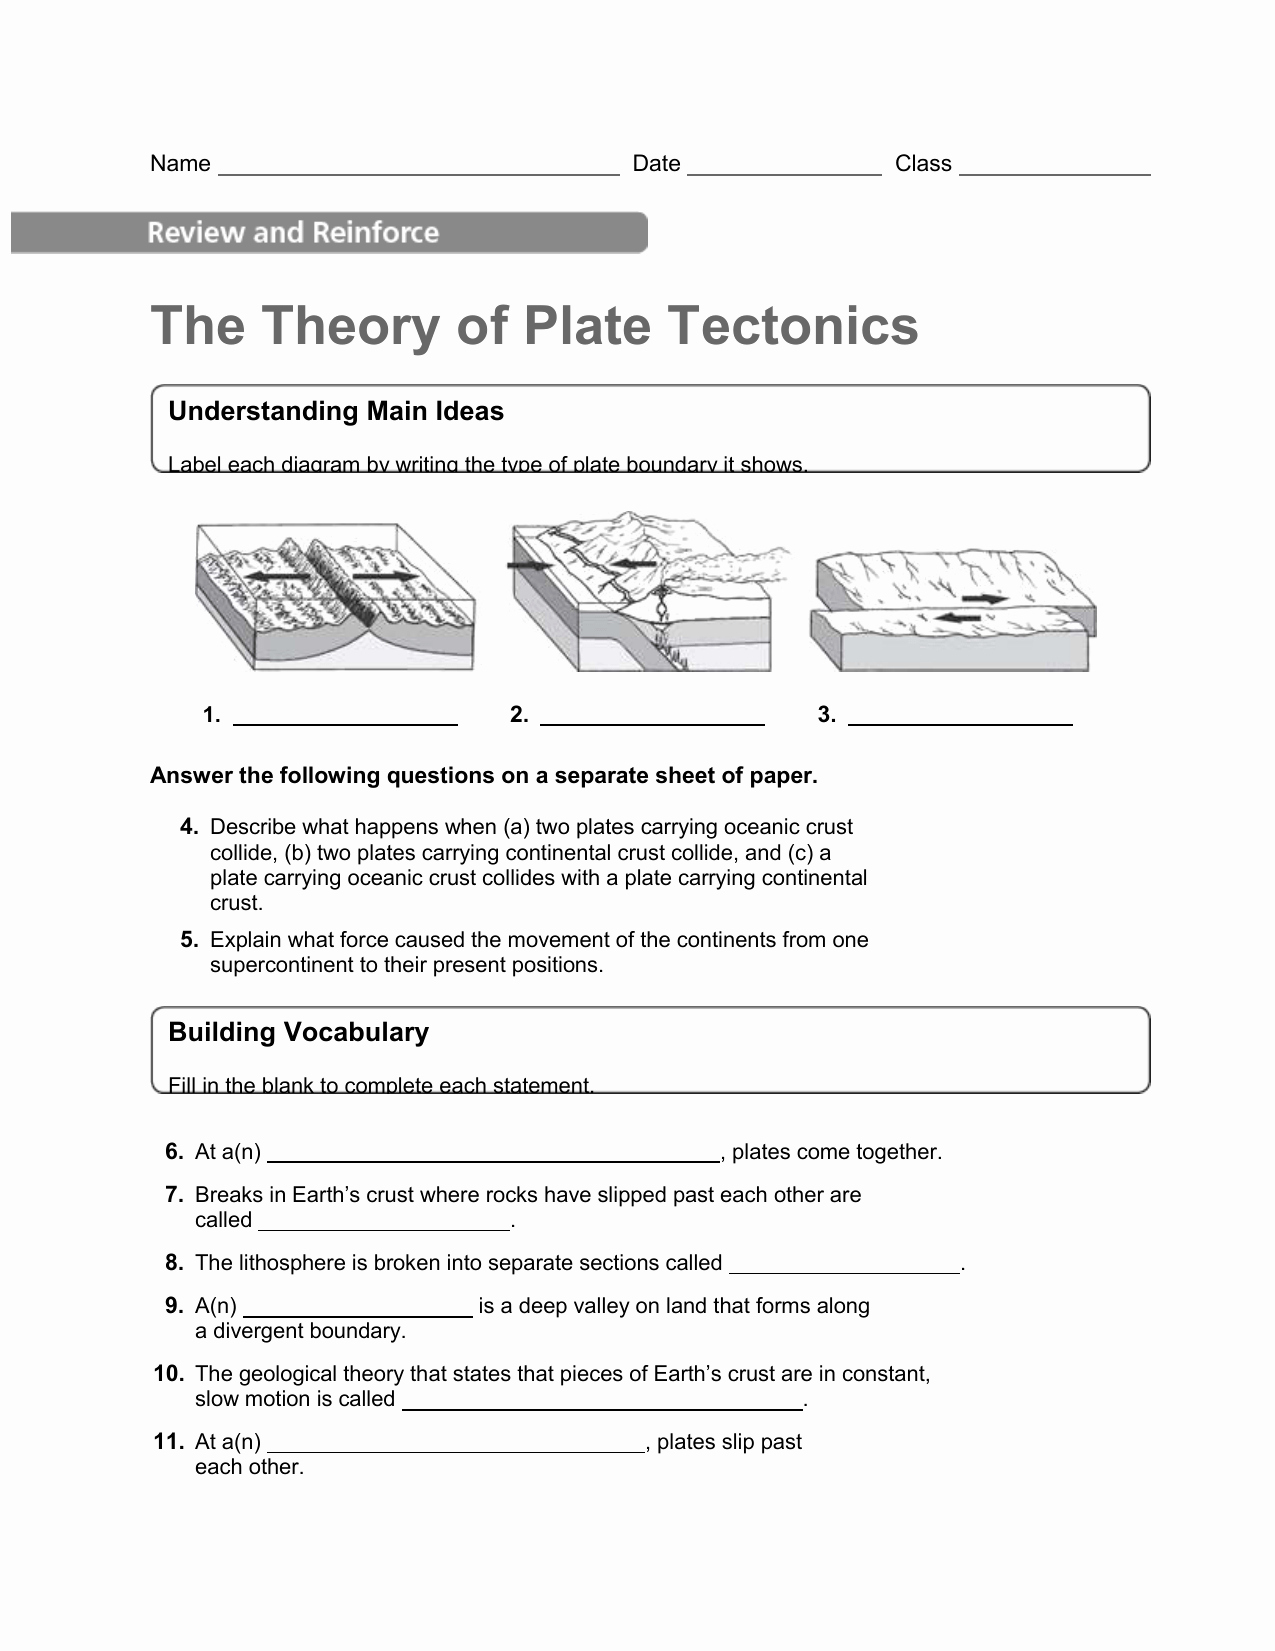 Plate Tectonics Worksheet Answer Key Lovely the theory Plate Tectonics Worksheet Answers Key